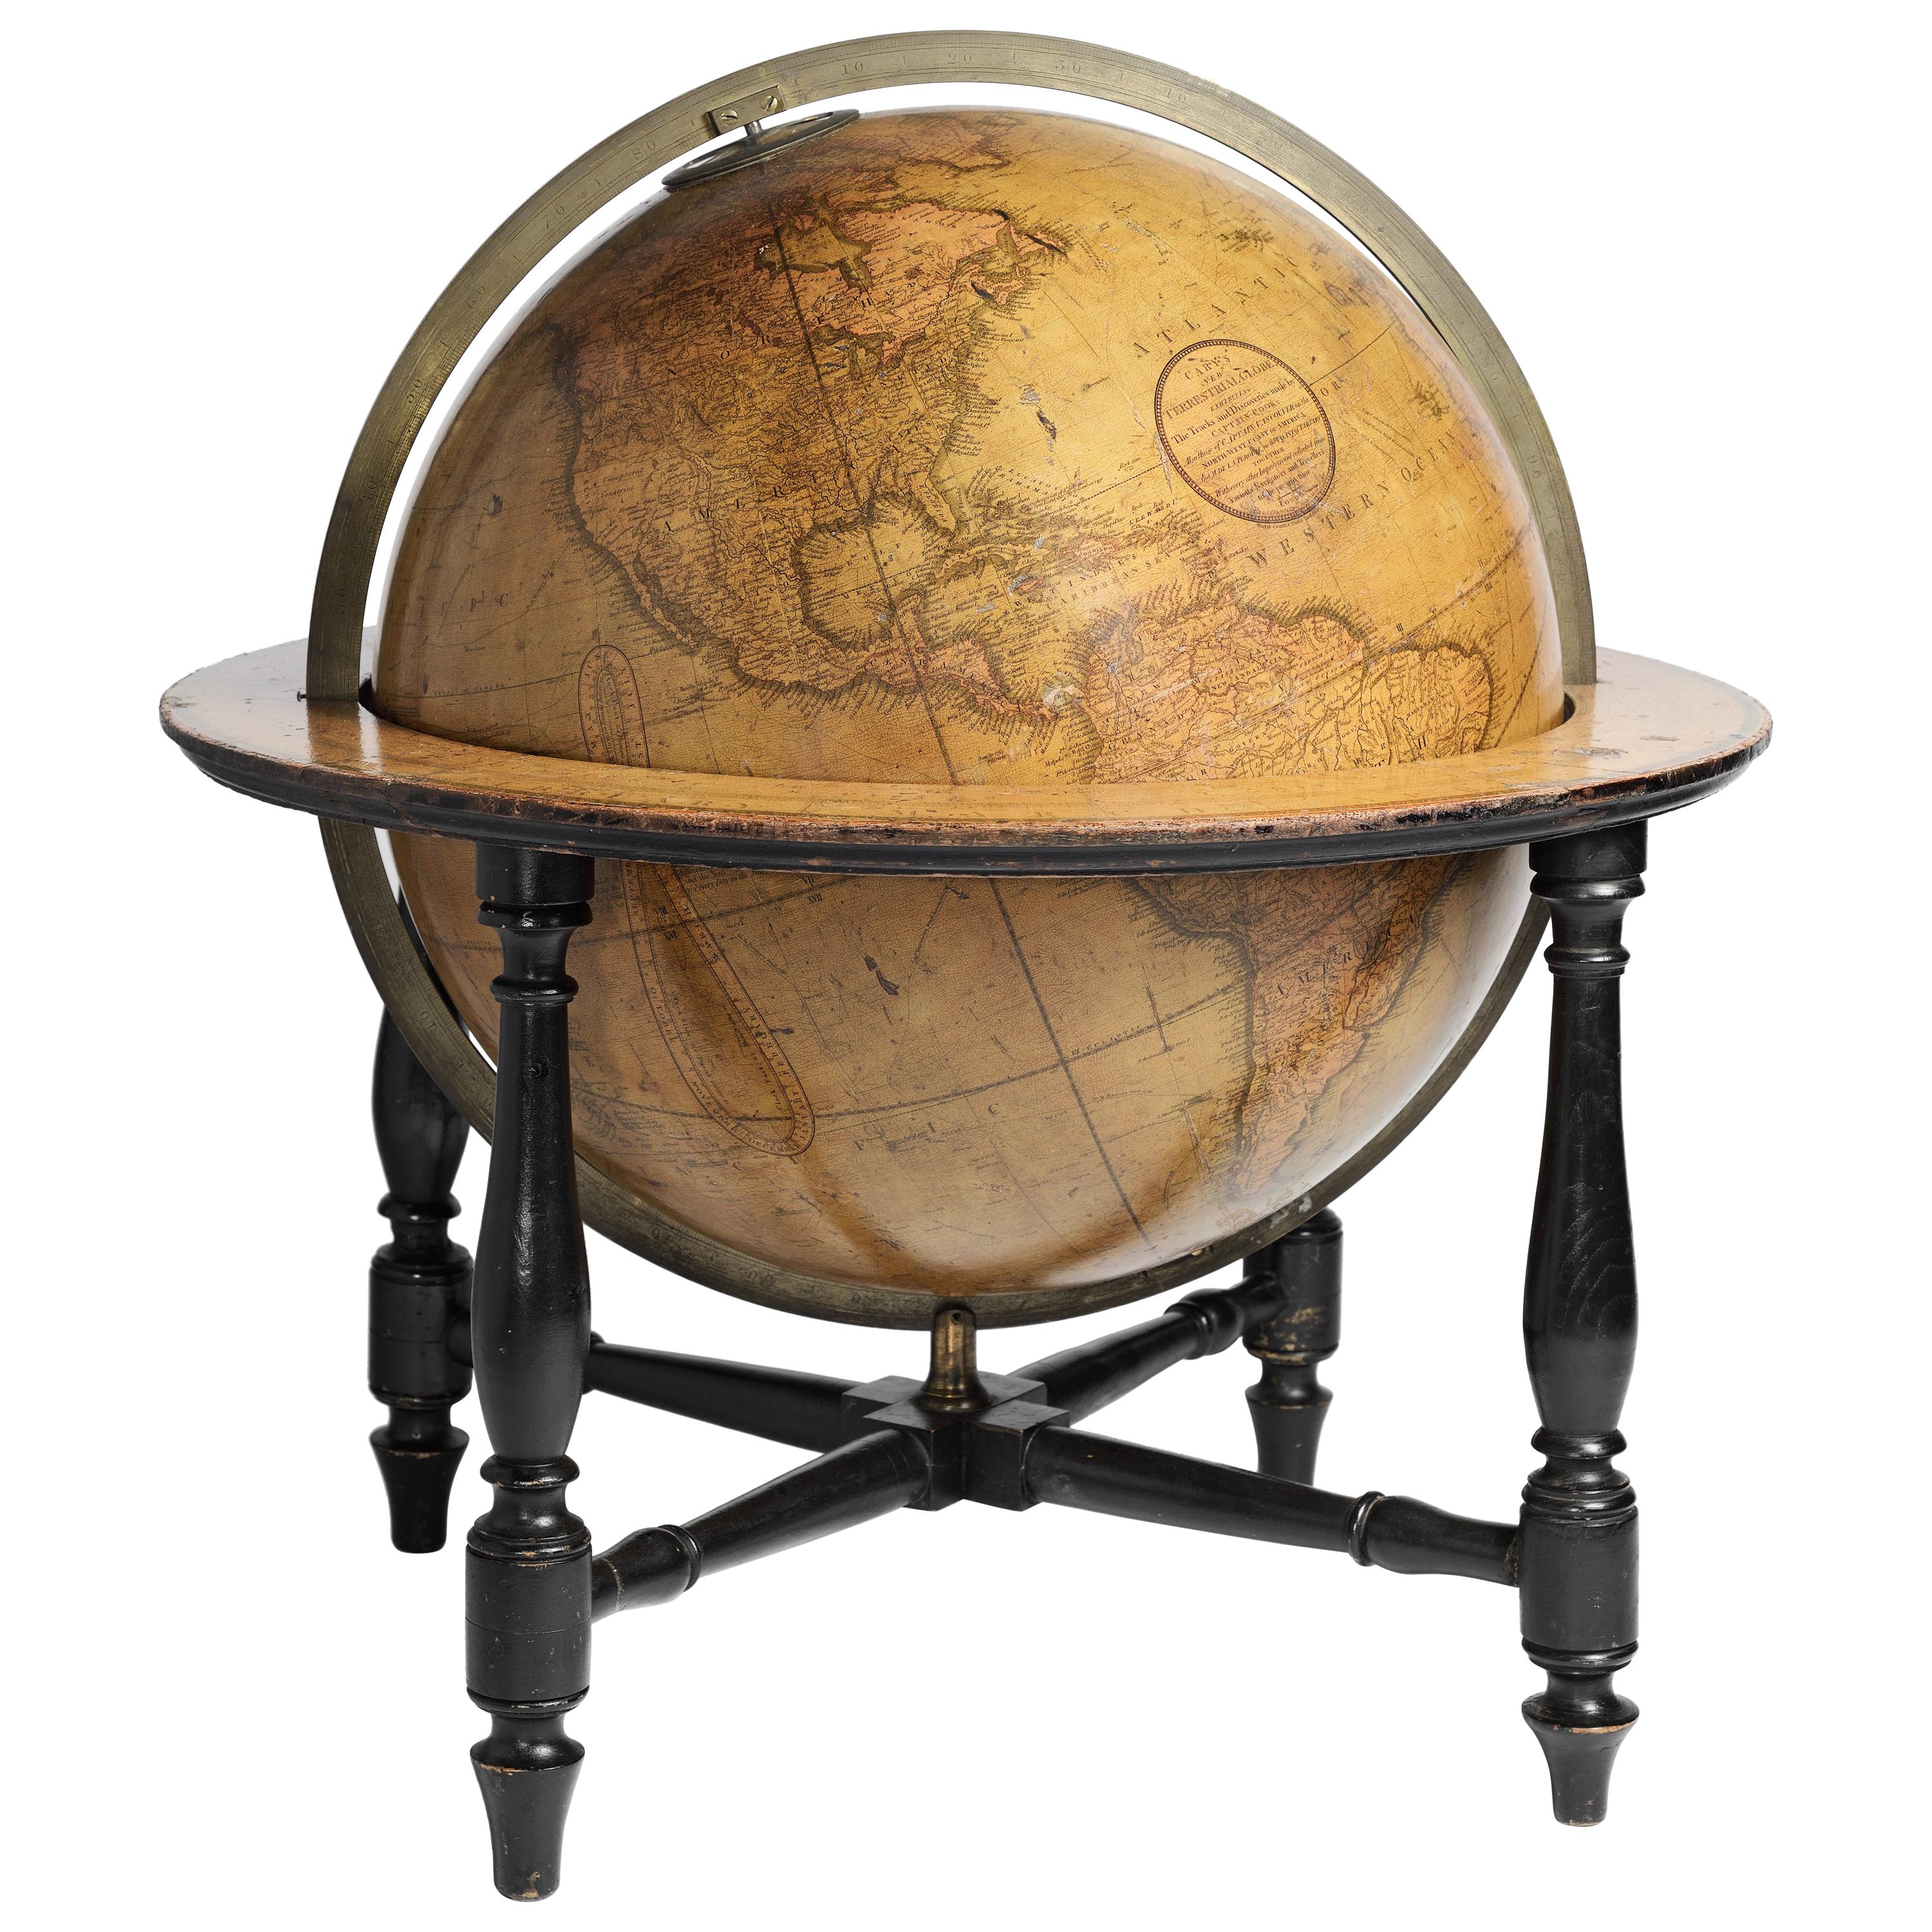 18-inch Globe, Cary's, London, 1840